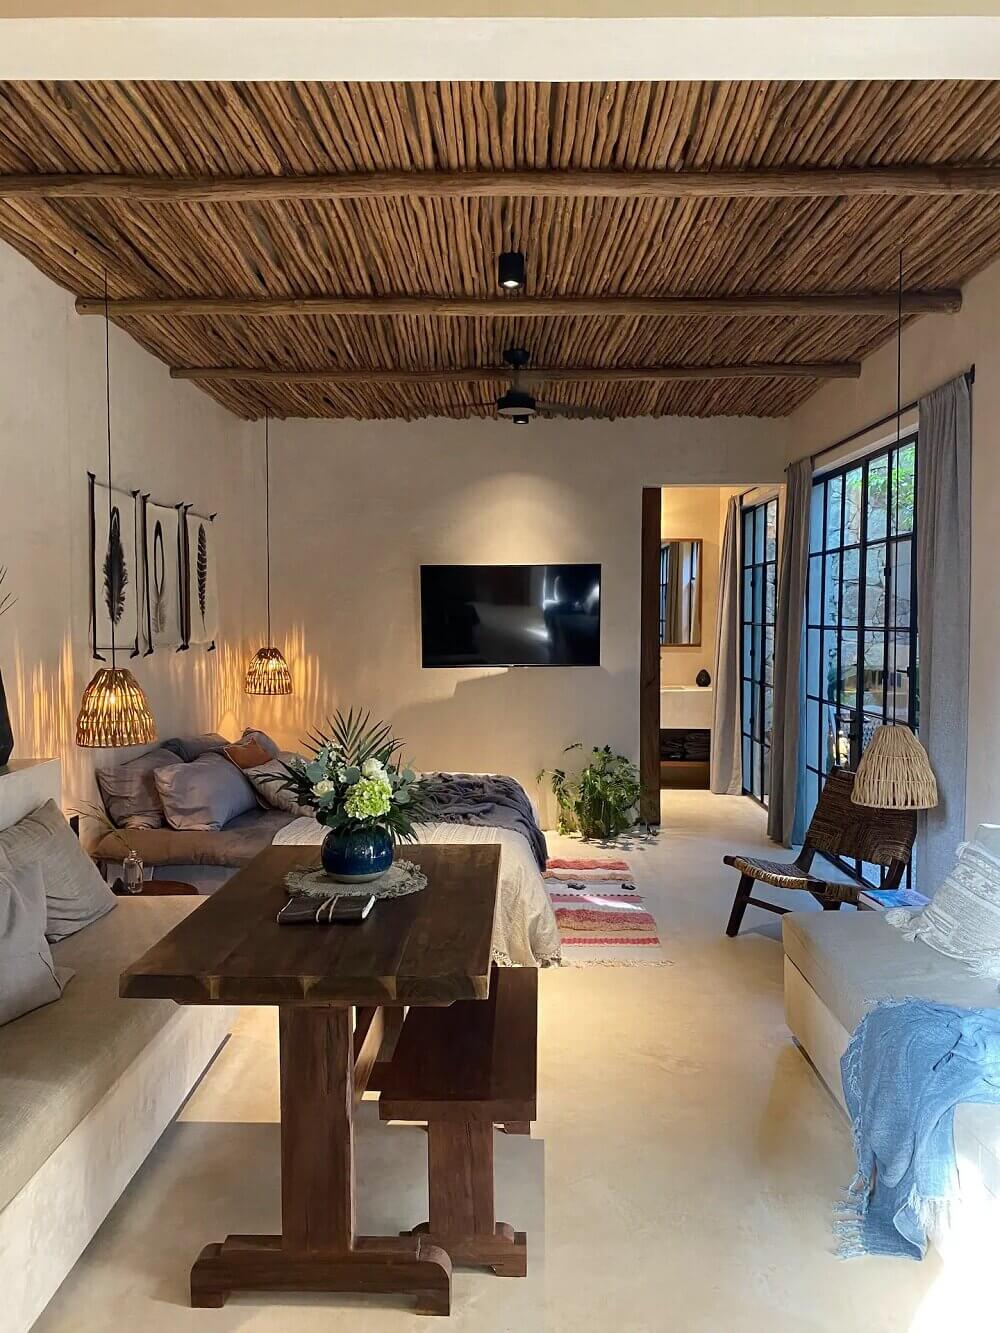 LianeTulum ABeautifulStudioApartmentAirbnbinMexico TheNordroom1 Liane Tulum: A Beautiful Studio Apartment Airbnb in Mexico